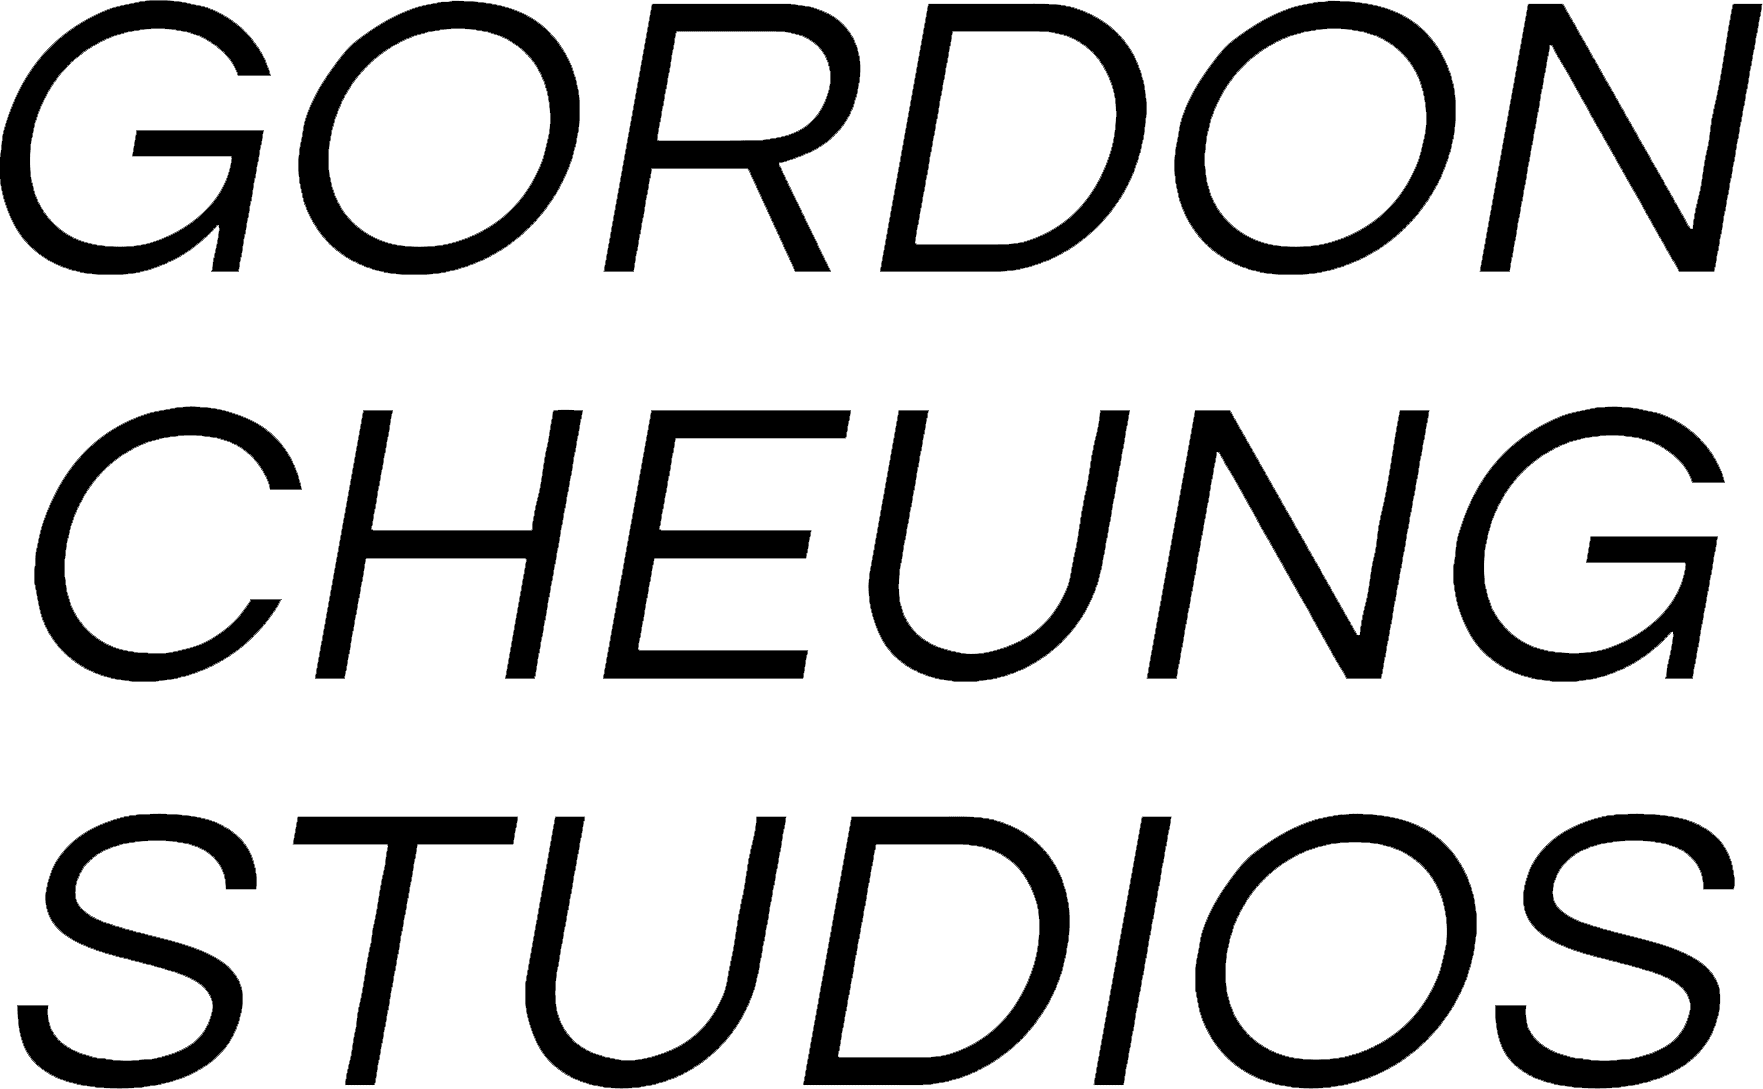 Gordon Cheung Studios company logo